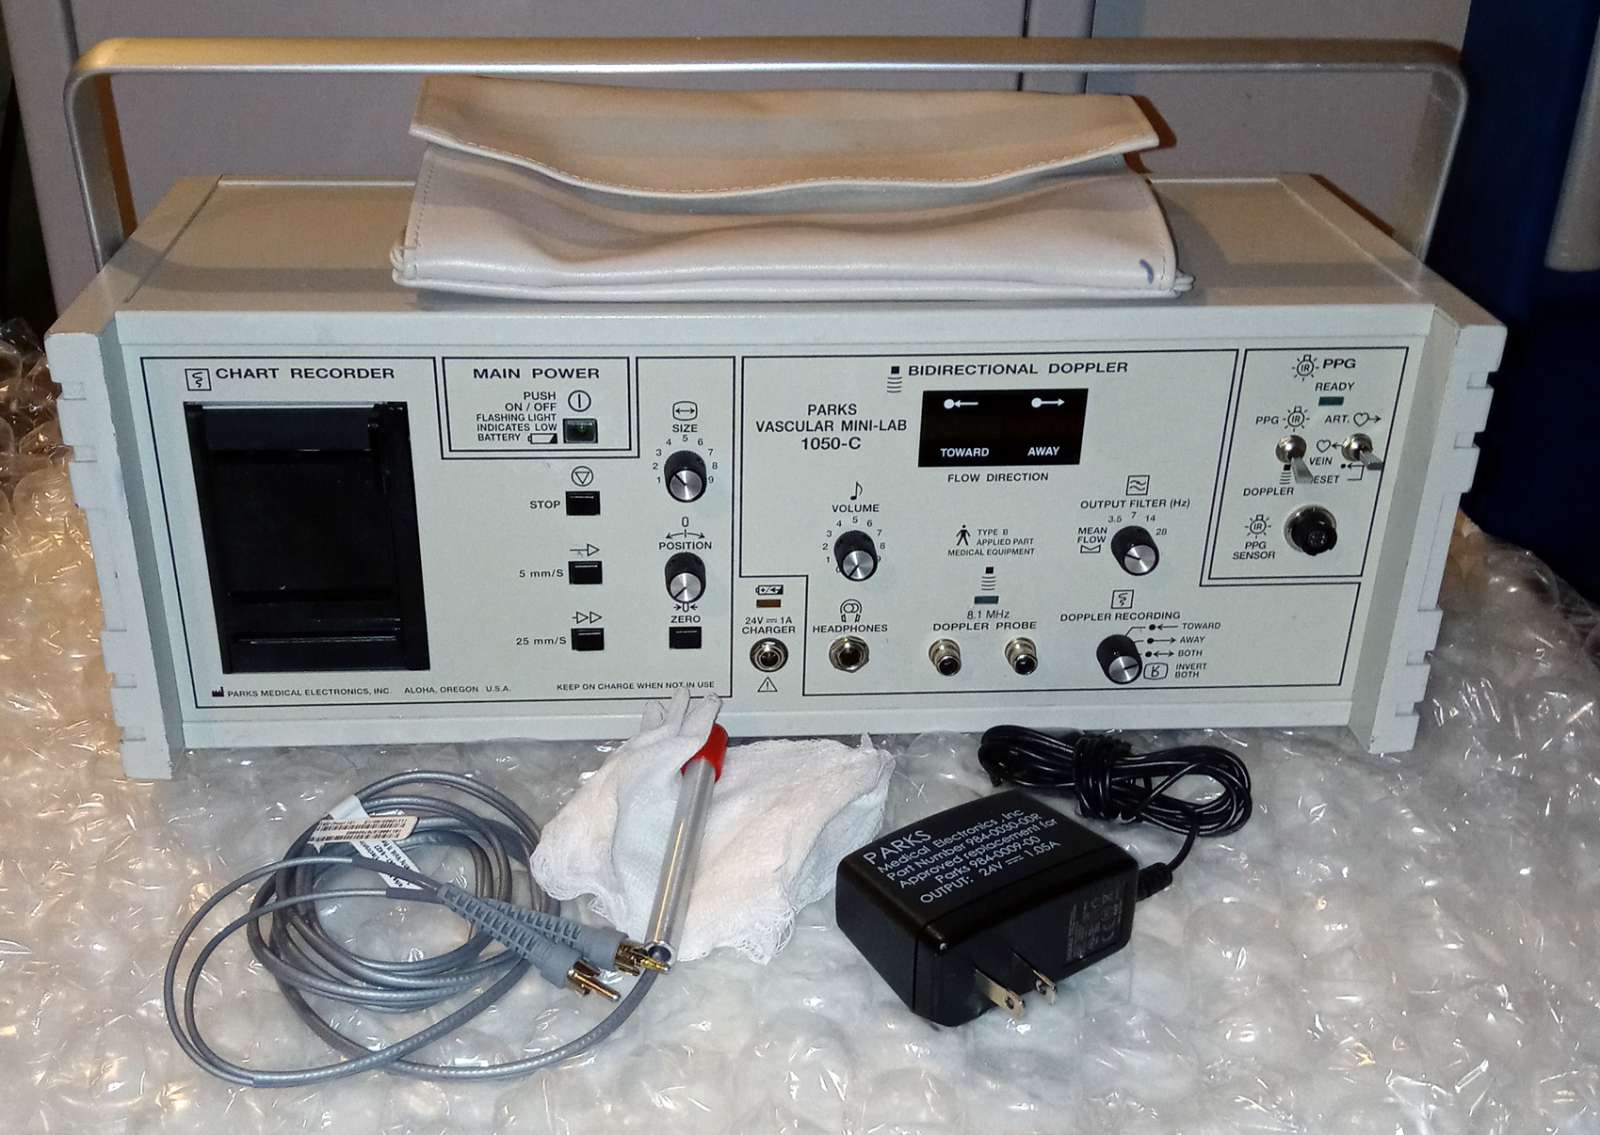 Very good condition Parks 1050C 1050-C 1050 C Vascular Mini Lab 8.1 mhz probe